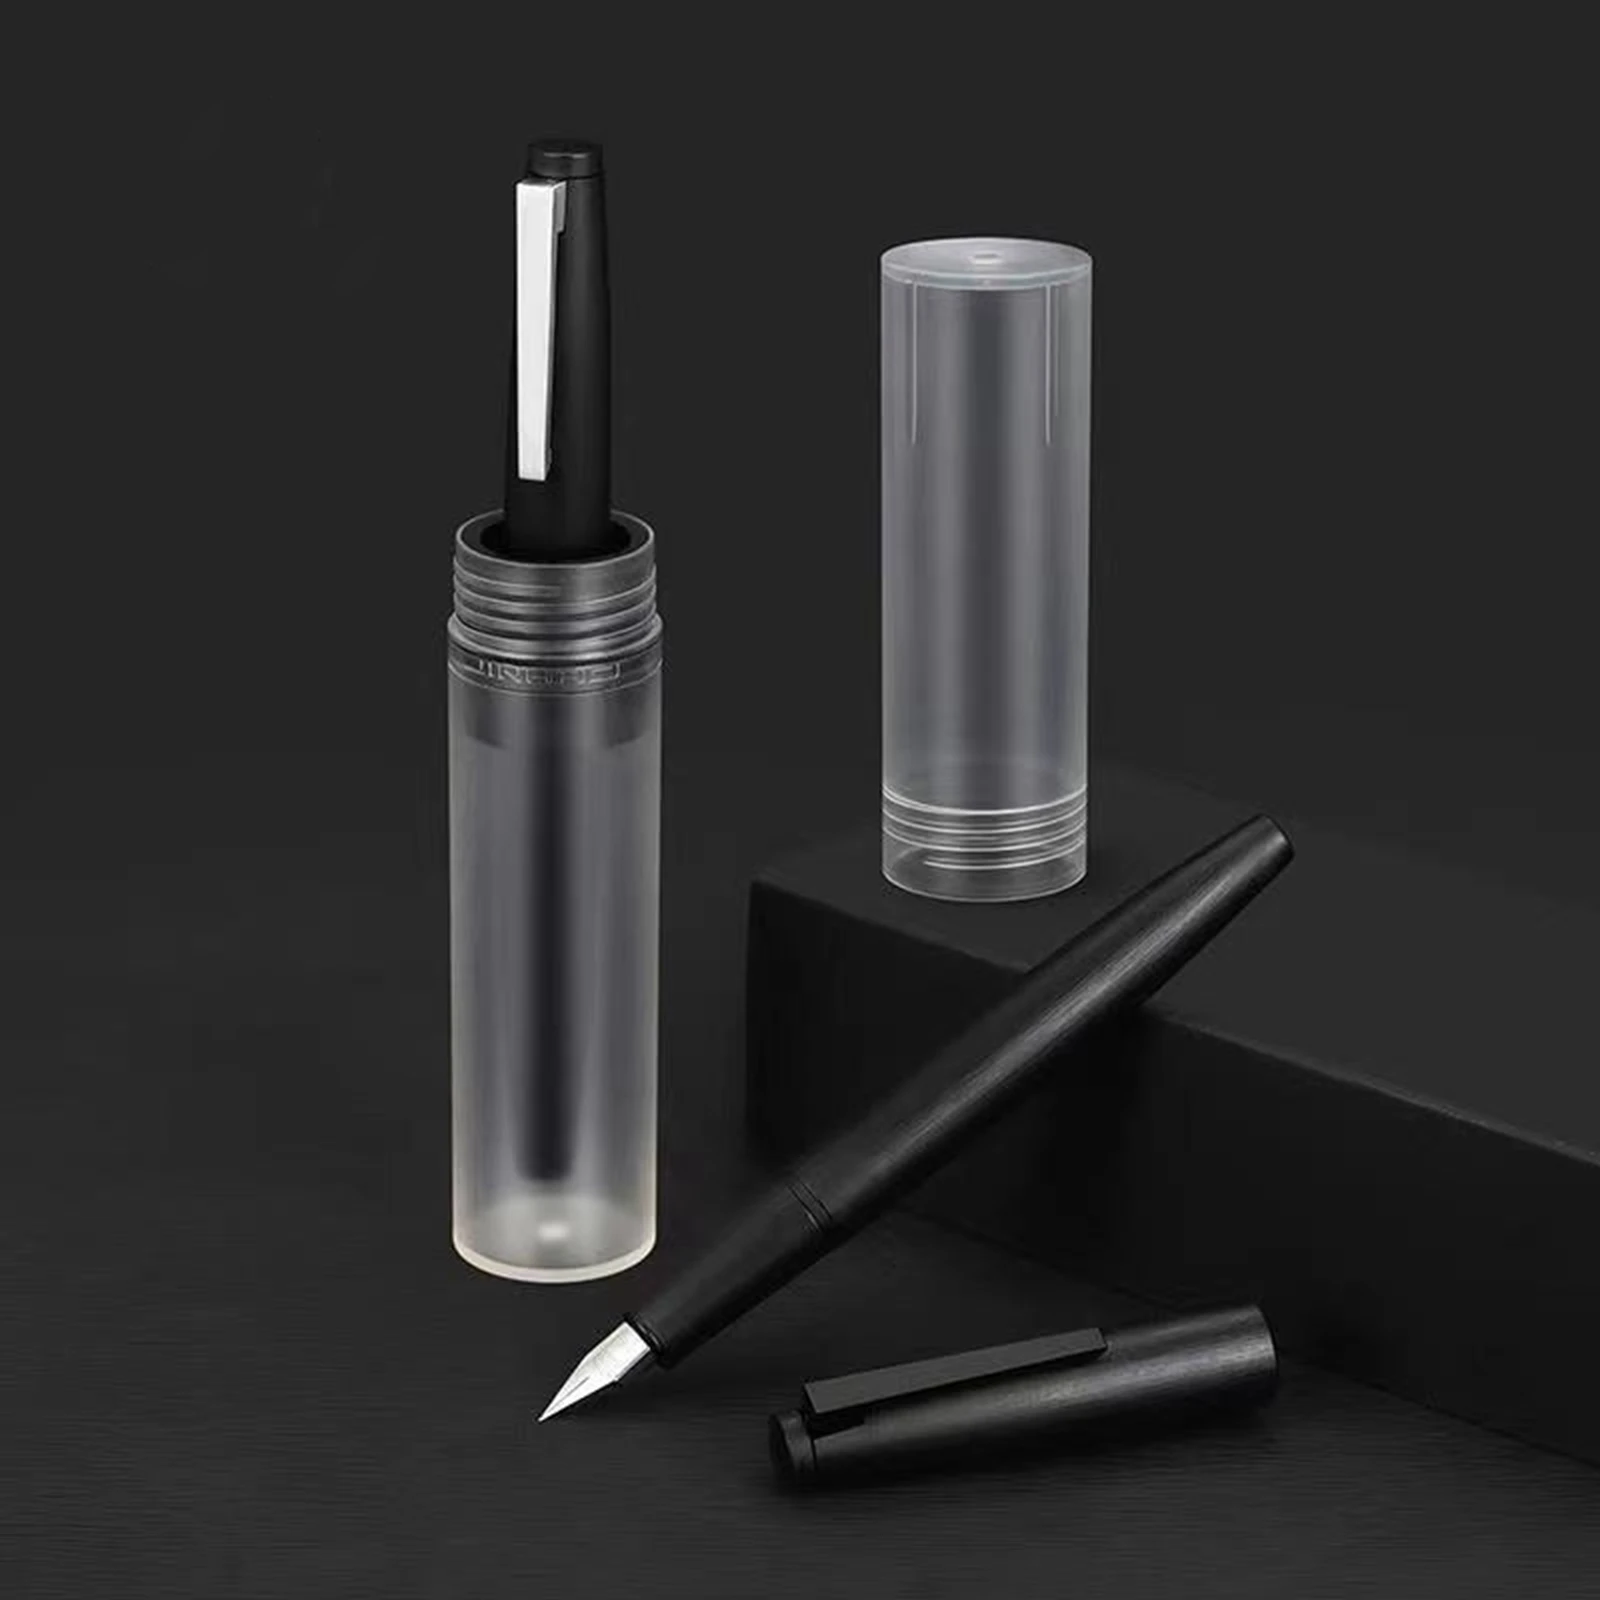 JINHAO 80 Series Fiber Black Fountain Pen Extra Fine 0.38mm Nib Writing